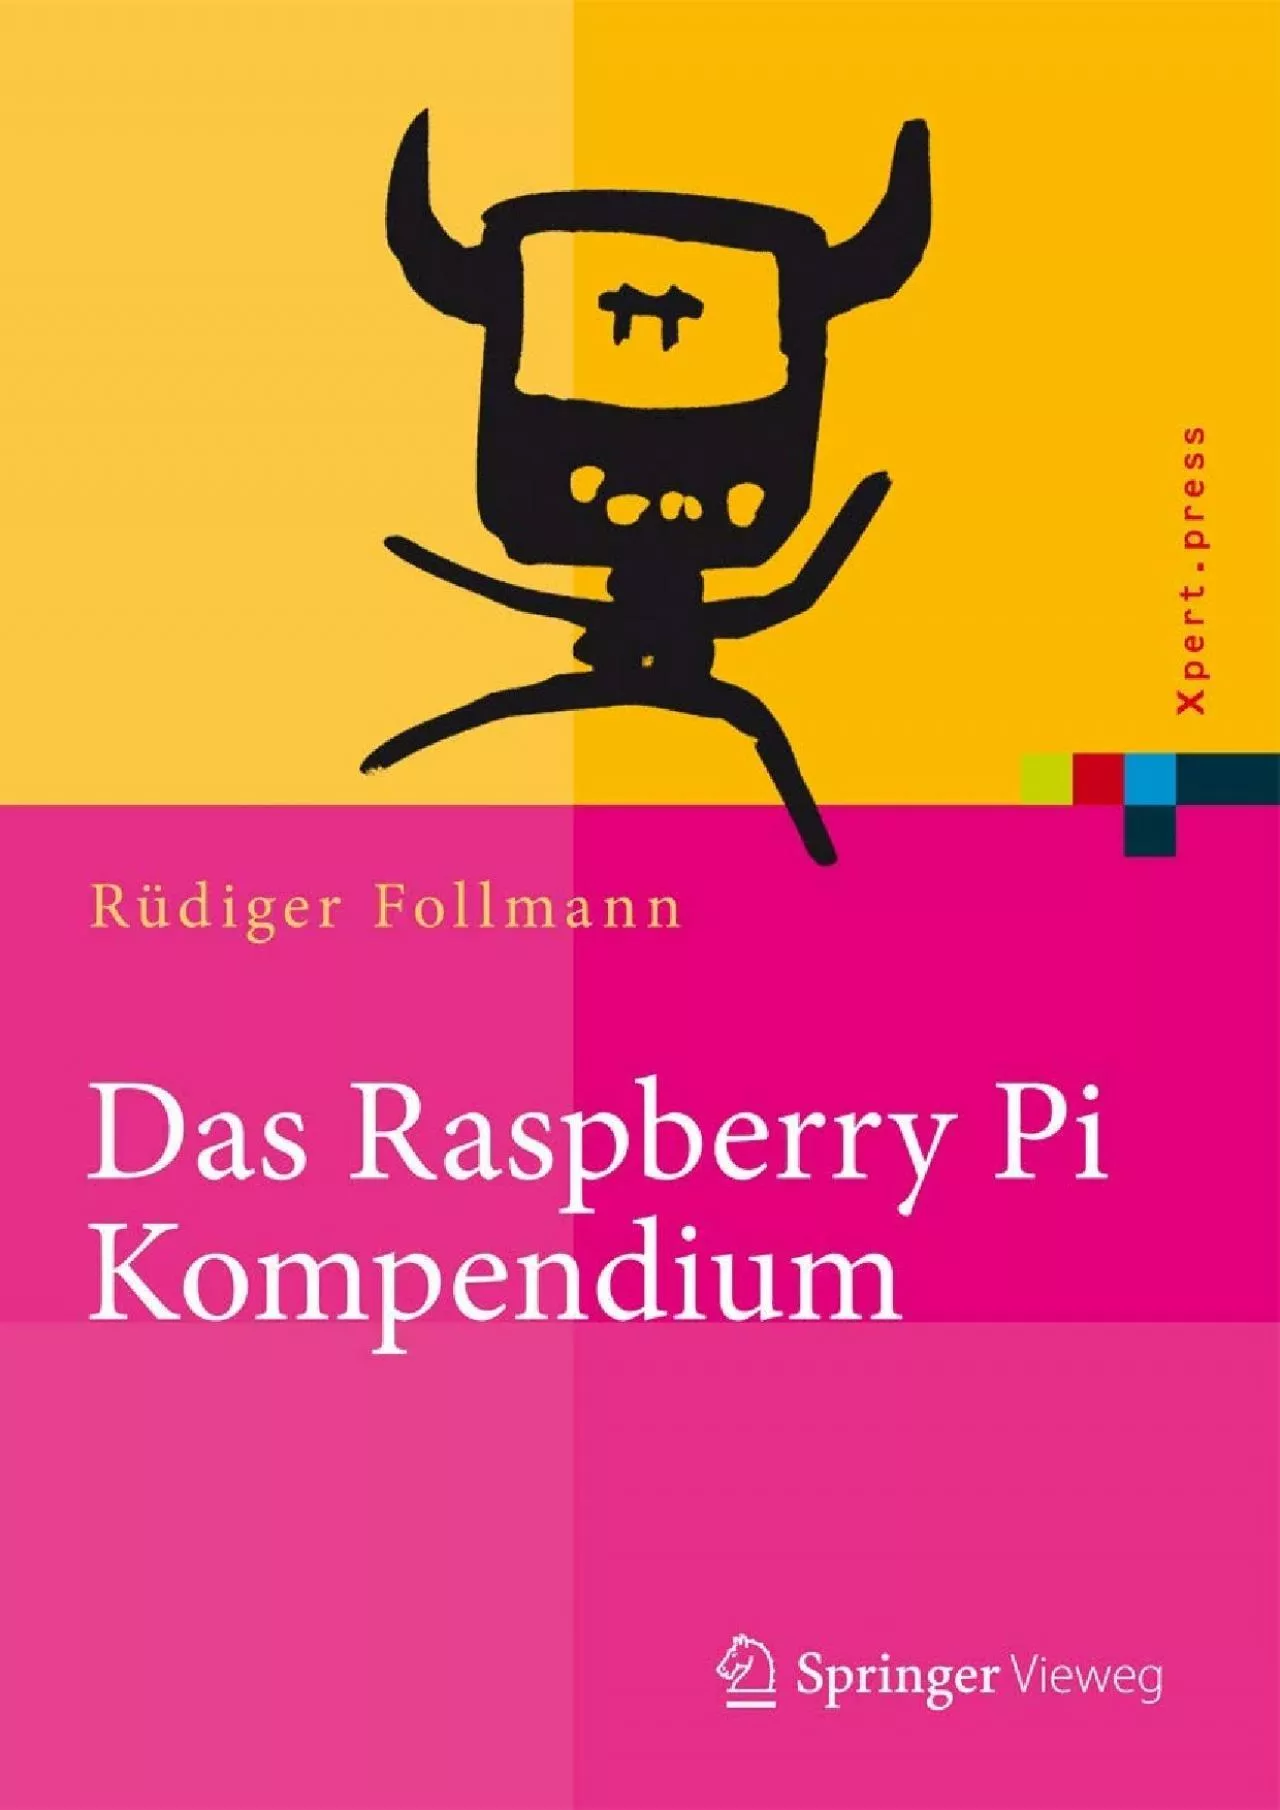 [FREE]-Das Raspberry Pi Kompendium (Xpert.press) (German Edition)